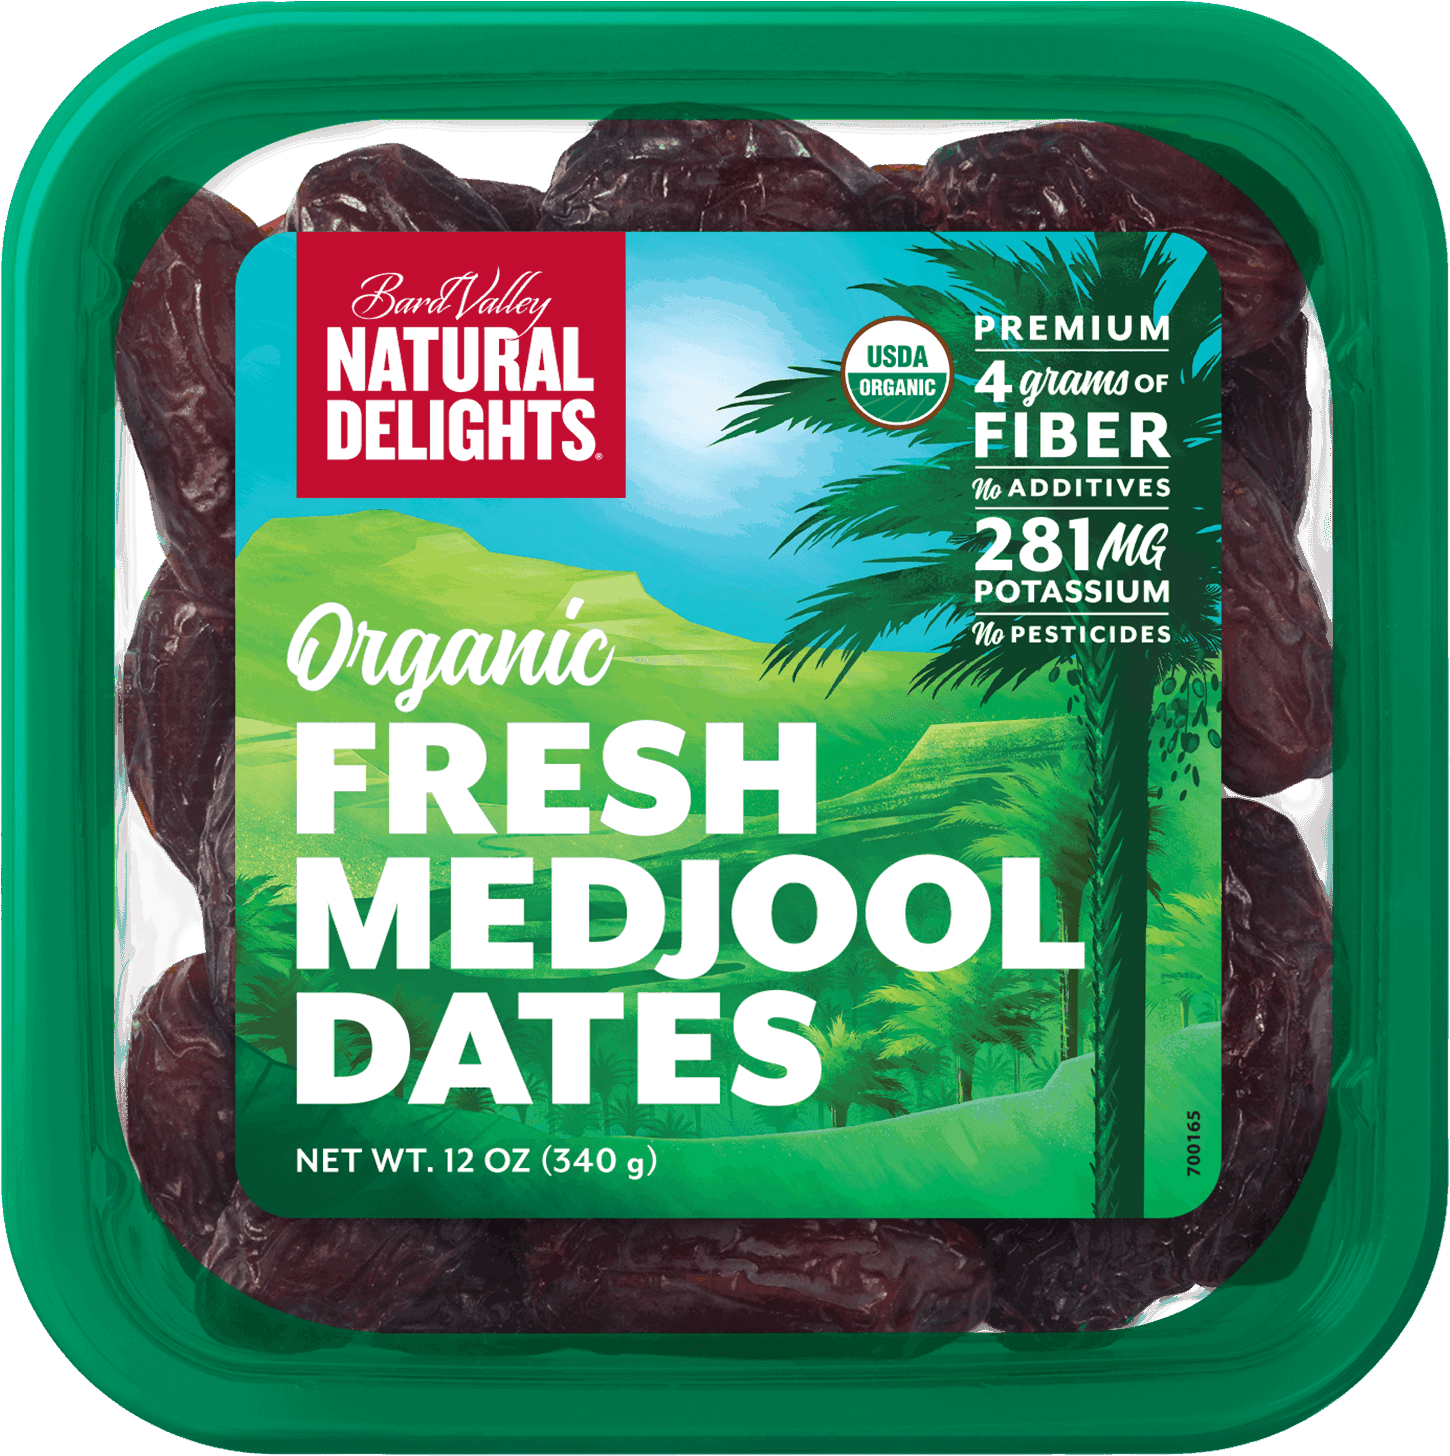 Organic Fresh Medjool Dates Packaging